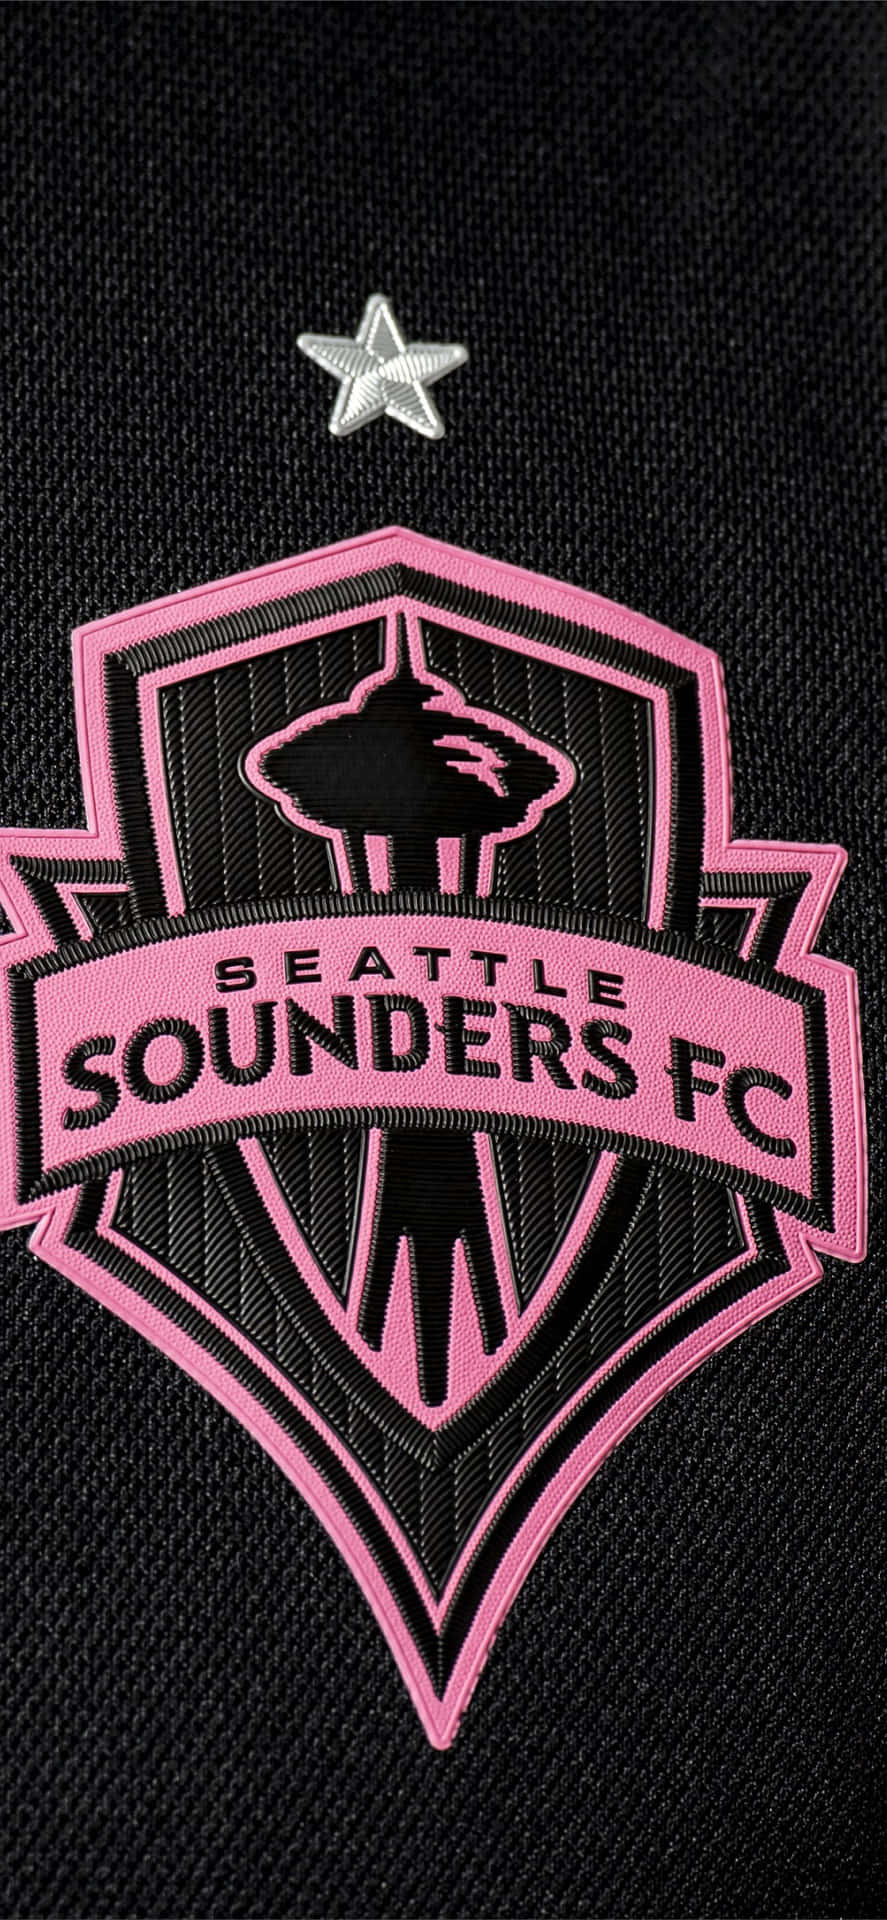 Seattlesounders Fc Nattfall Matchtröja Logotyp. Wallpaper